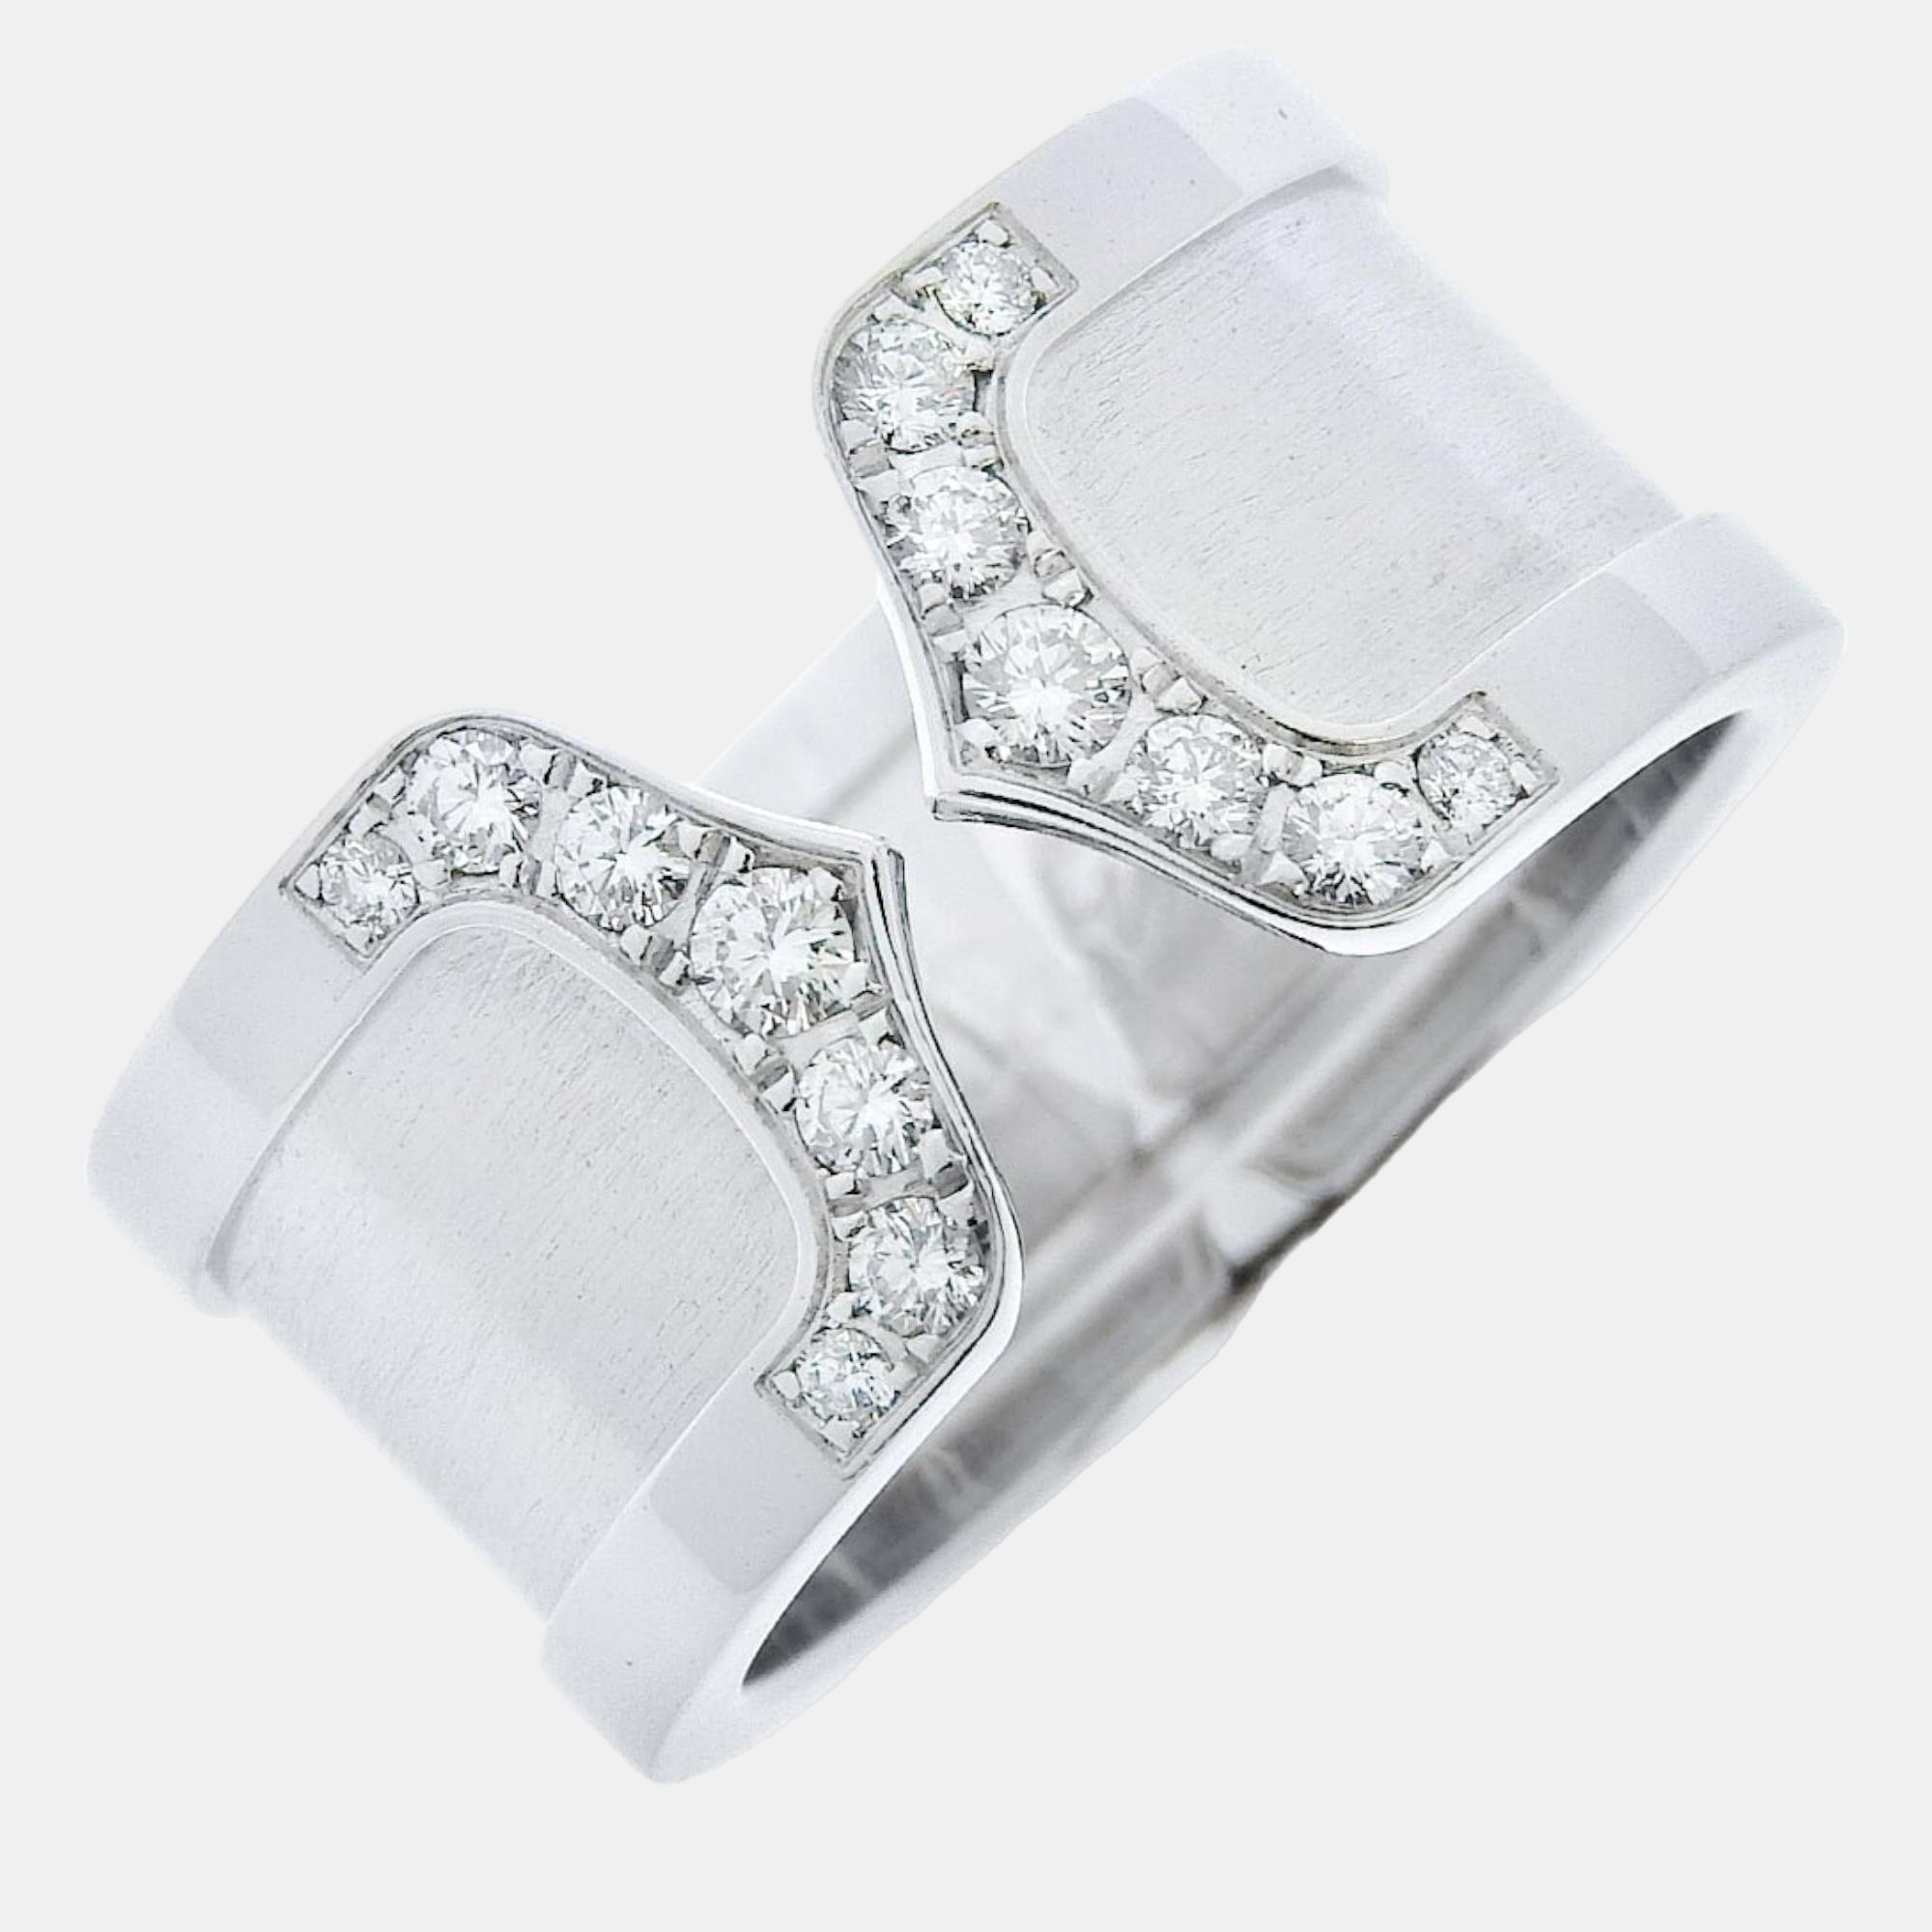 Cartier c de cartier 18k white gold diamond ring eu 51